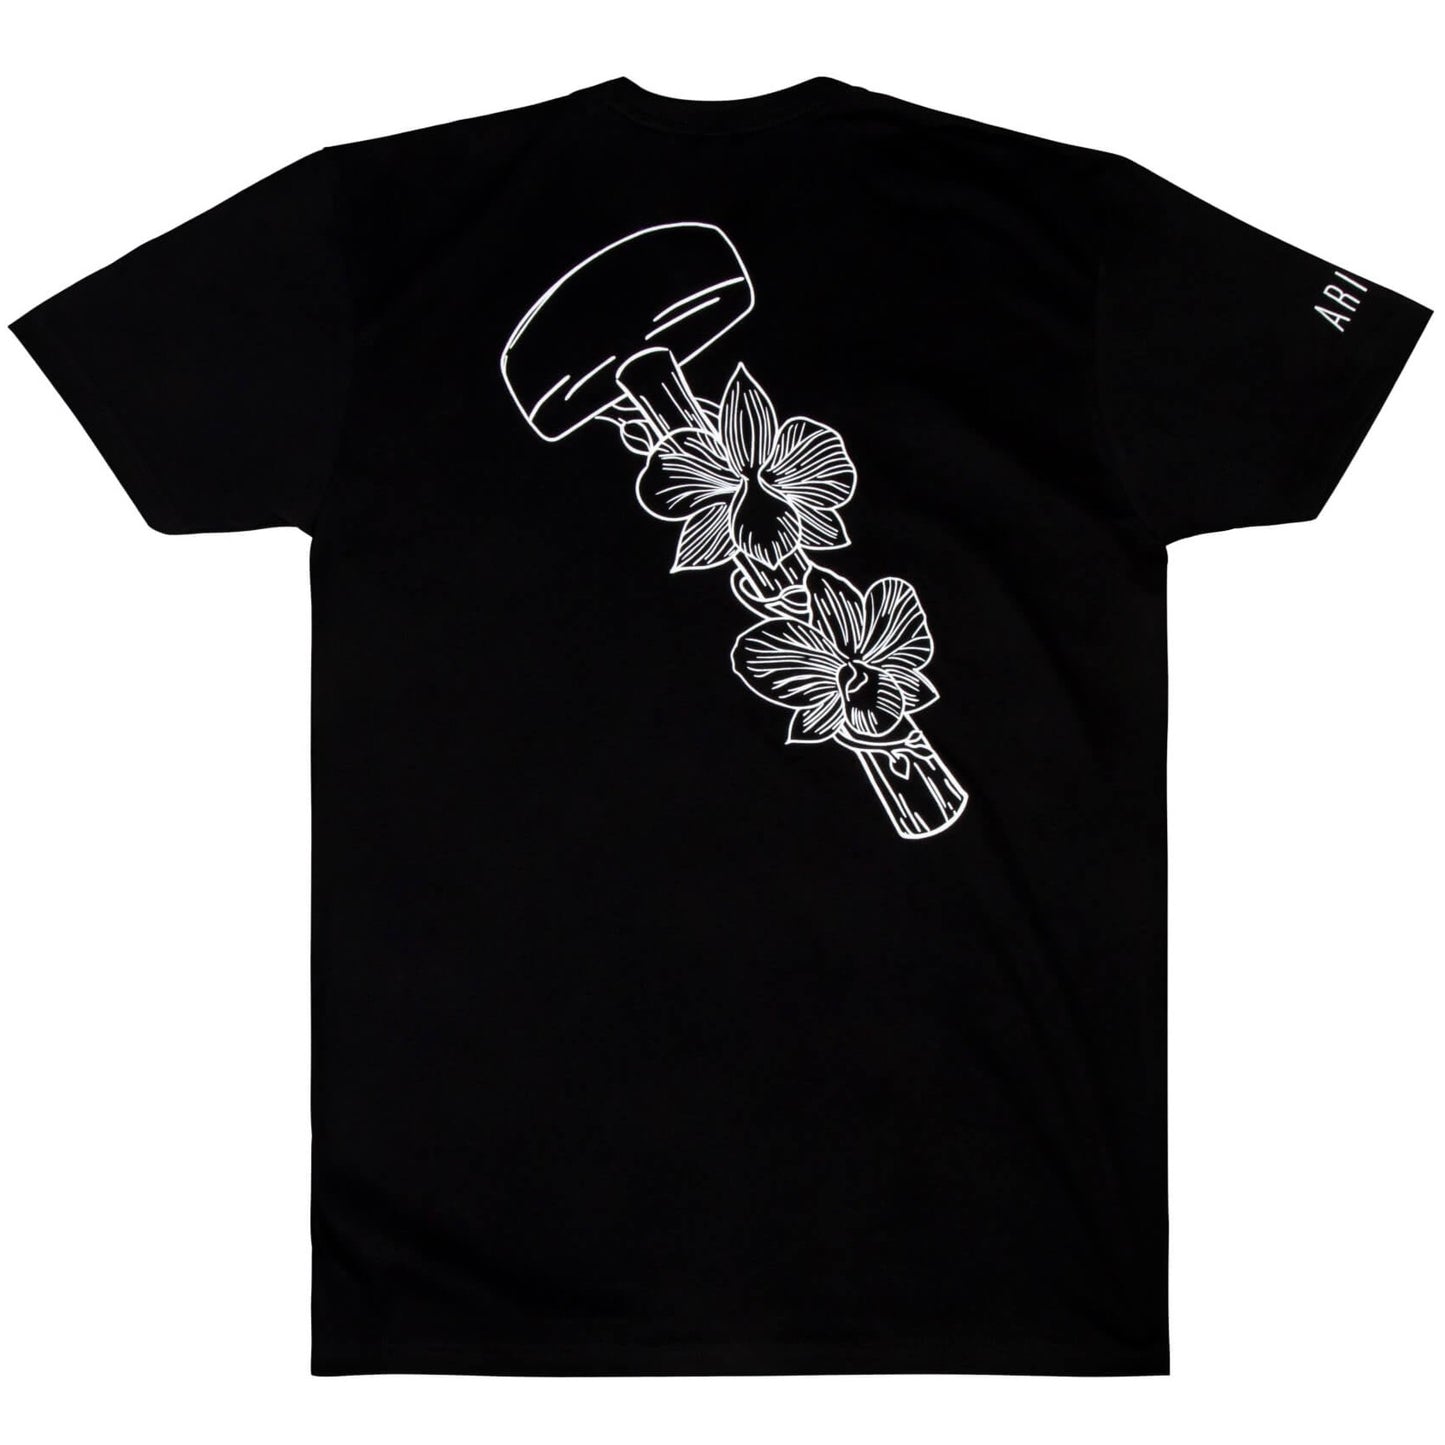 Ariete x Miami Skyline T-shirt - Black